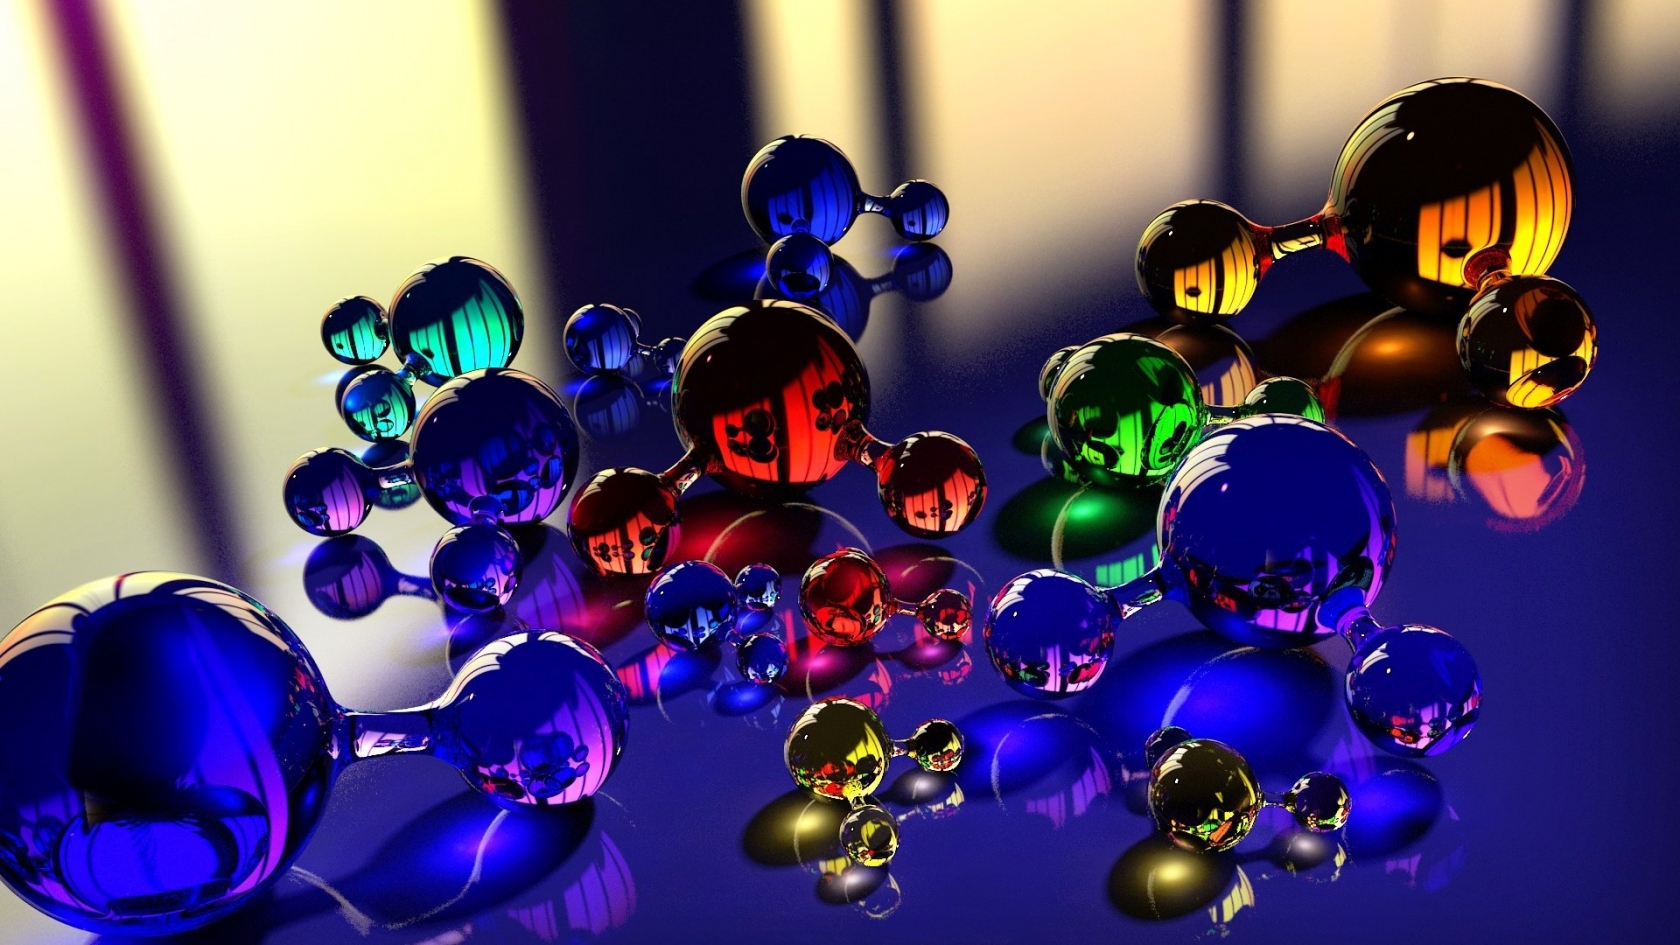 Molecule Stress Ball for 1680 x 945 HDTV resolution